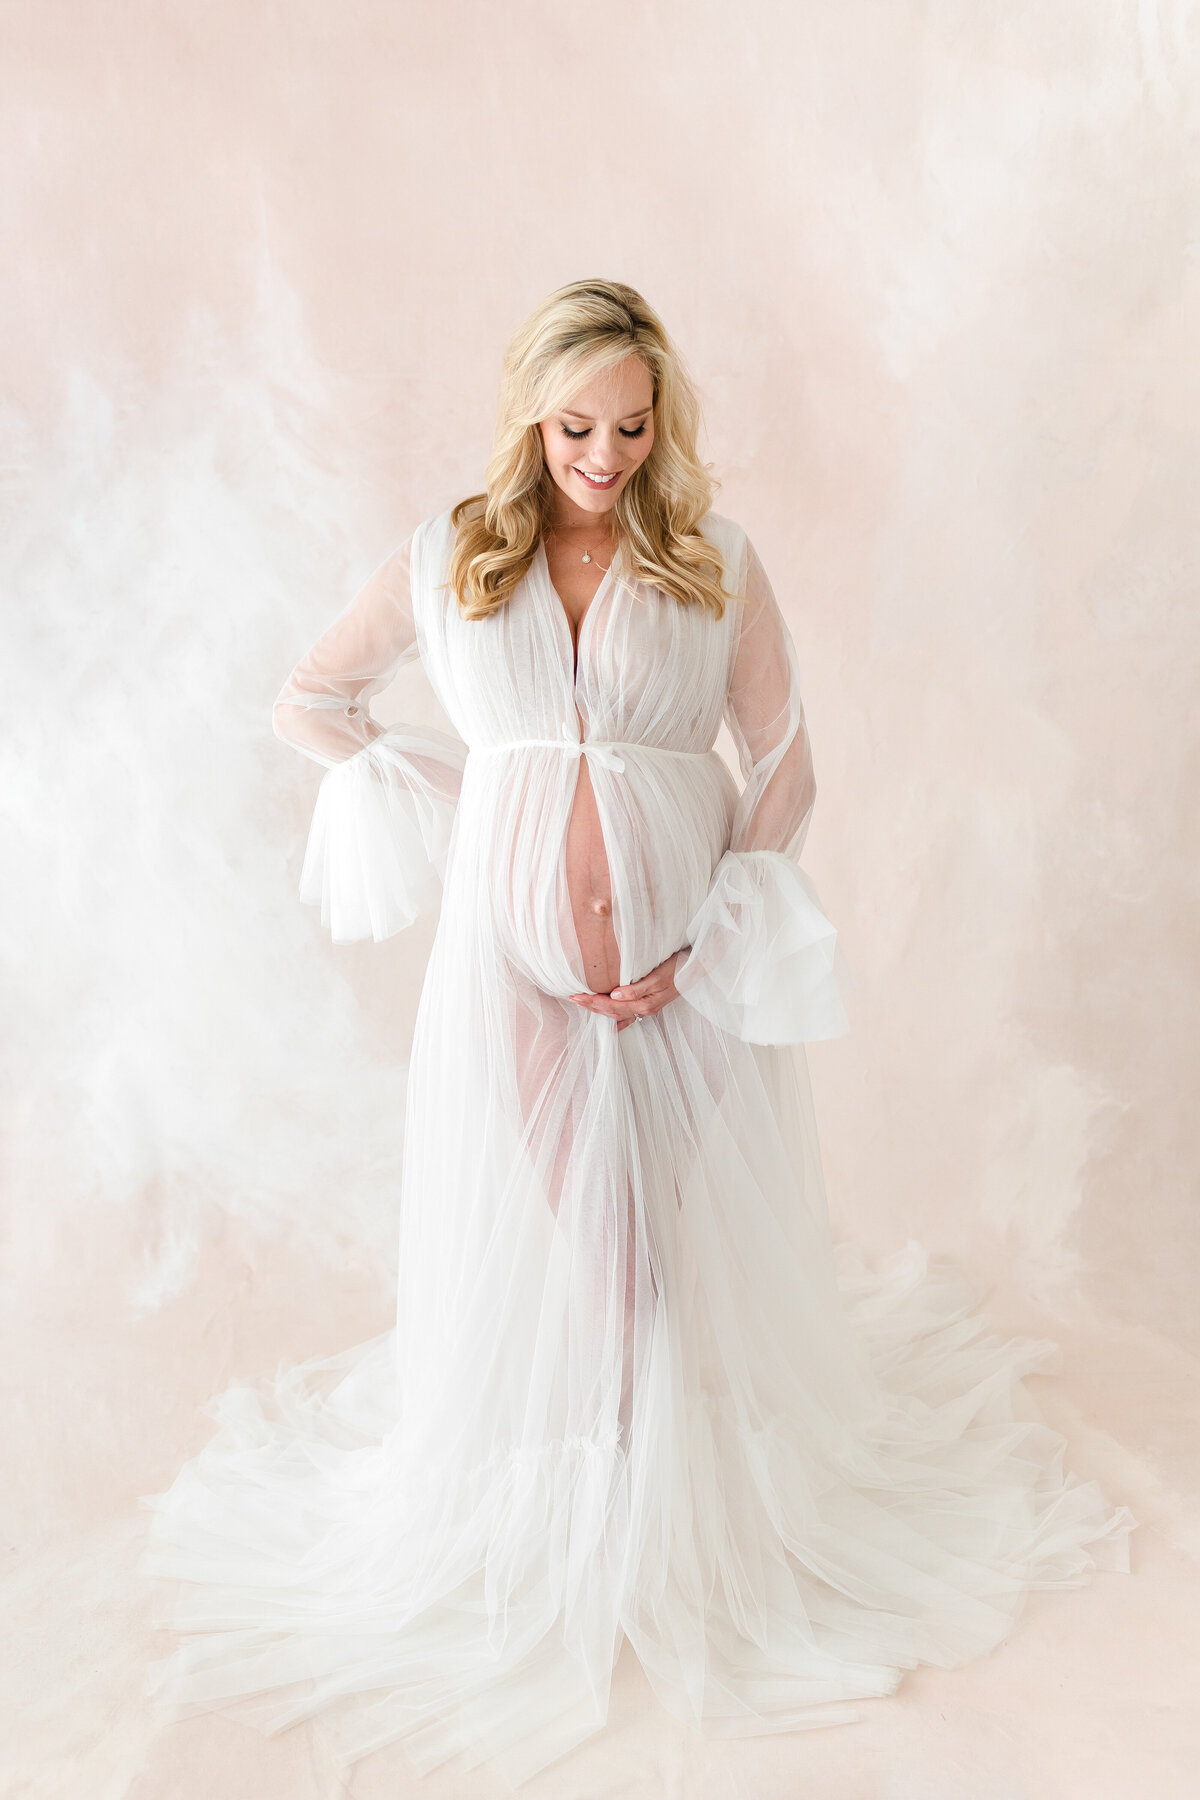 A stunning boudoir DC Maternity Photographer photo in our Warrenton studio